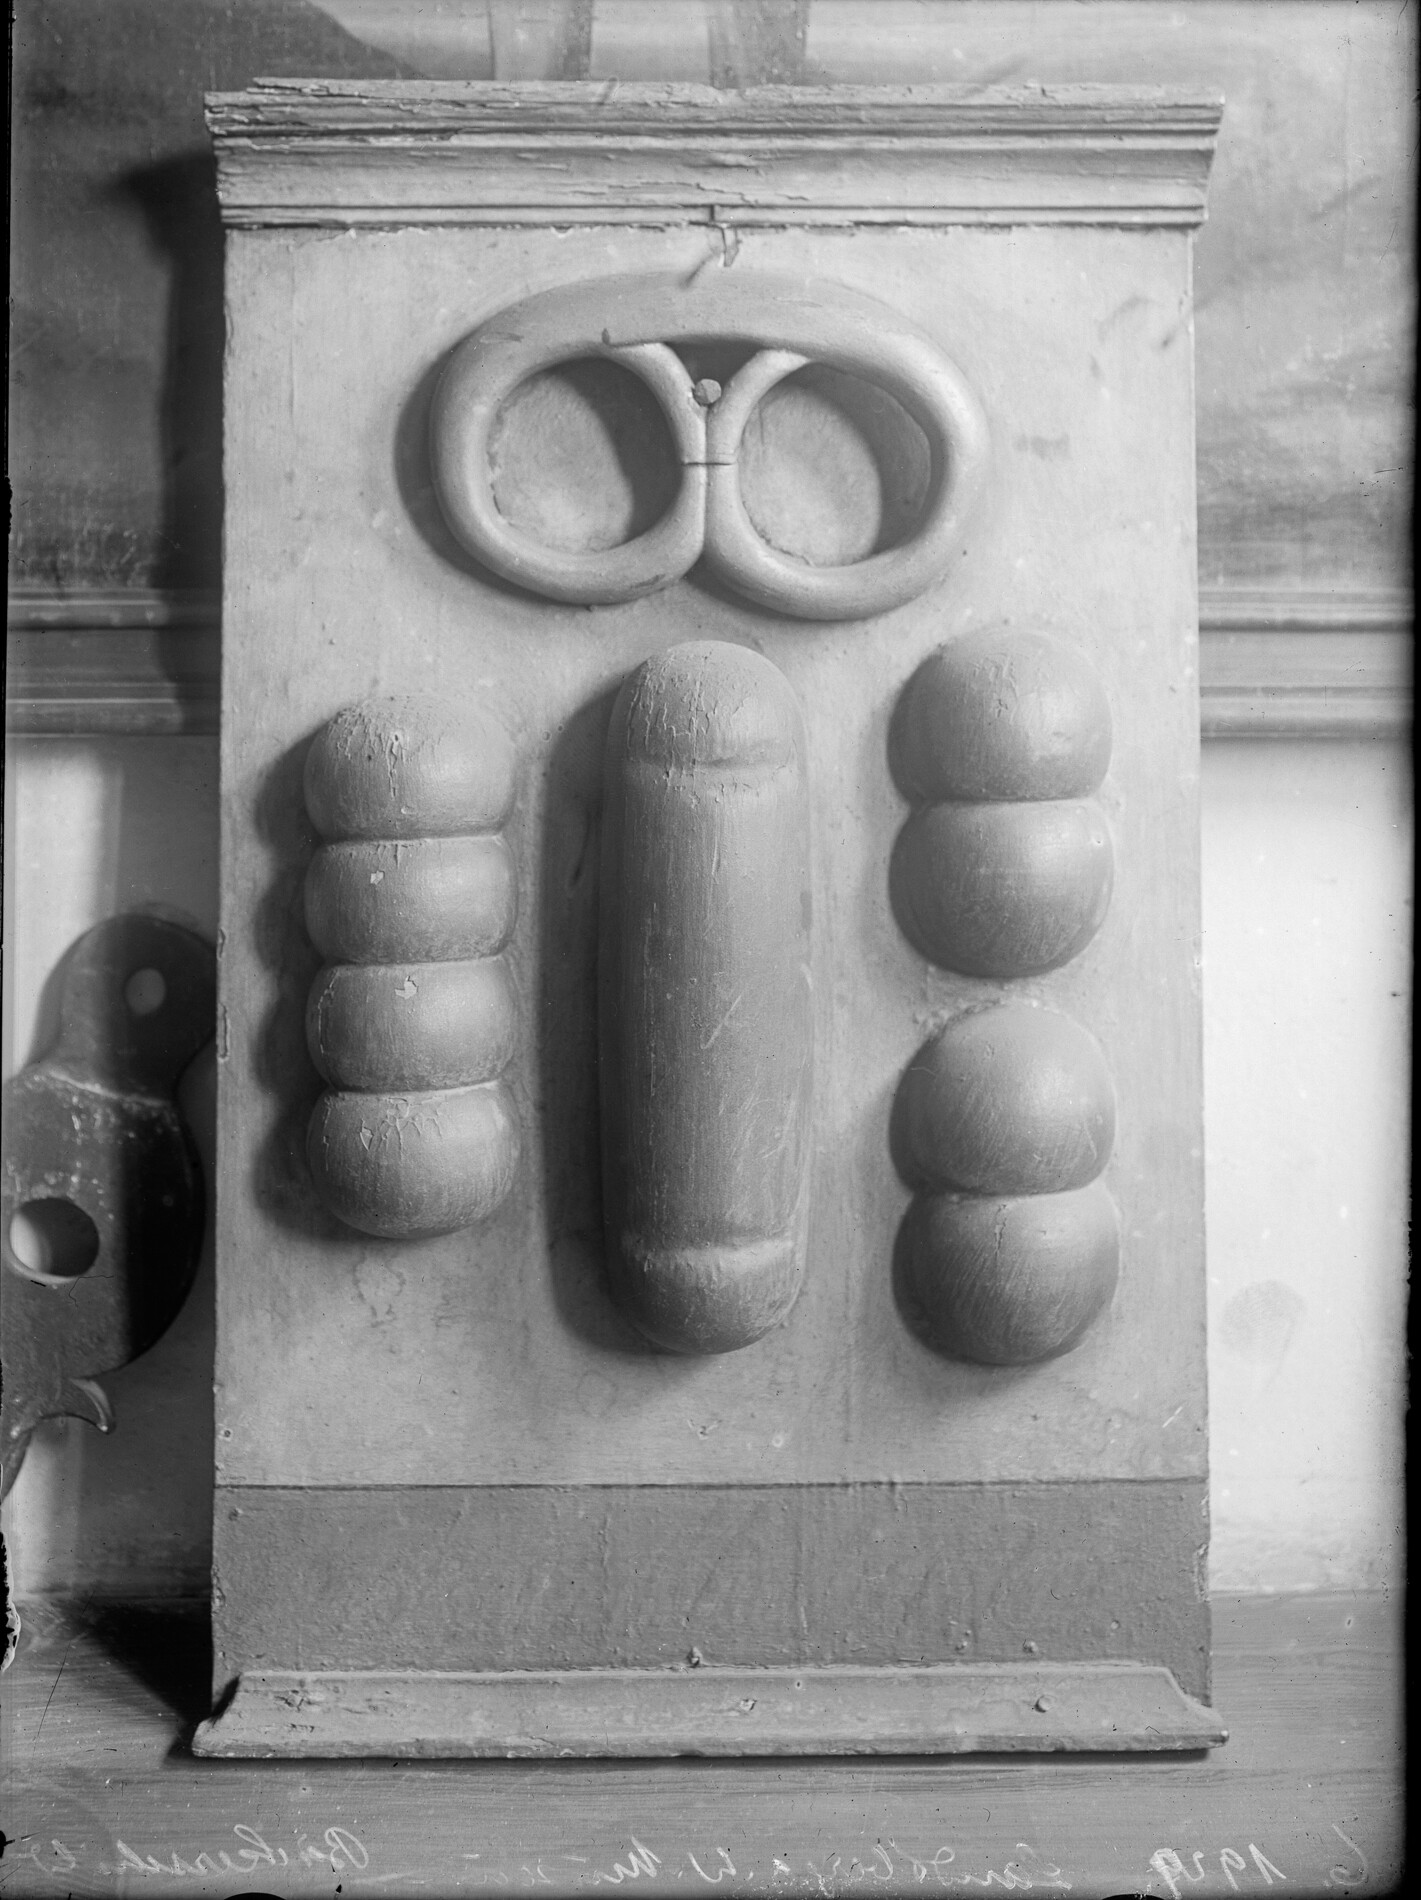 WKT 91: Aushänger eines Bäckers (Museumsverband des Landes Brandenburg e.V. CC BY-NC-SA)